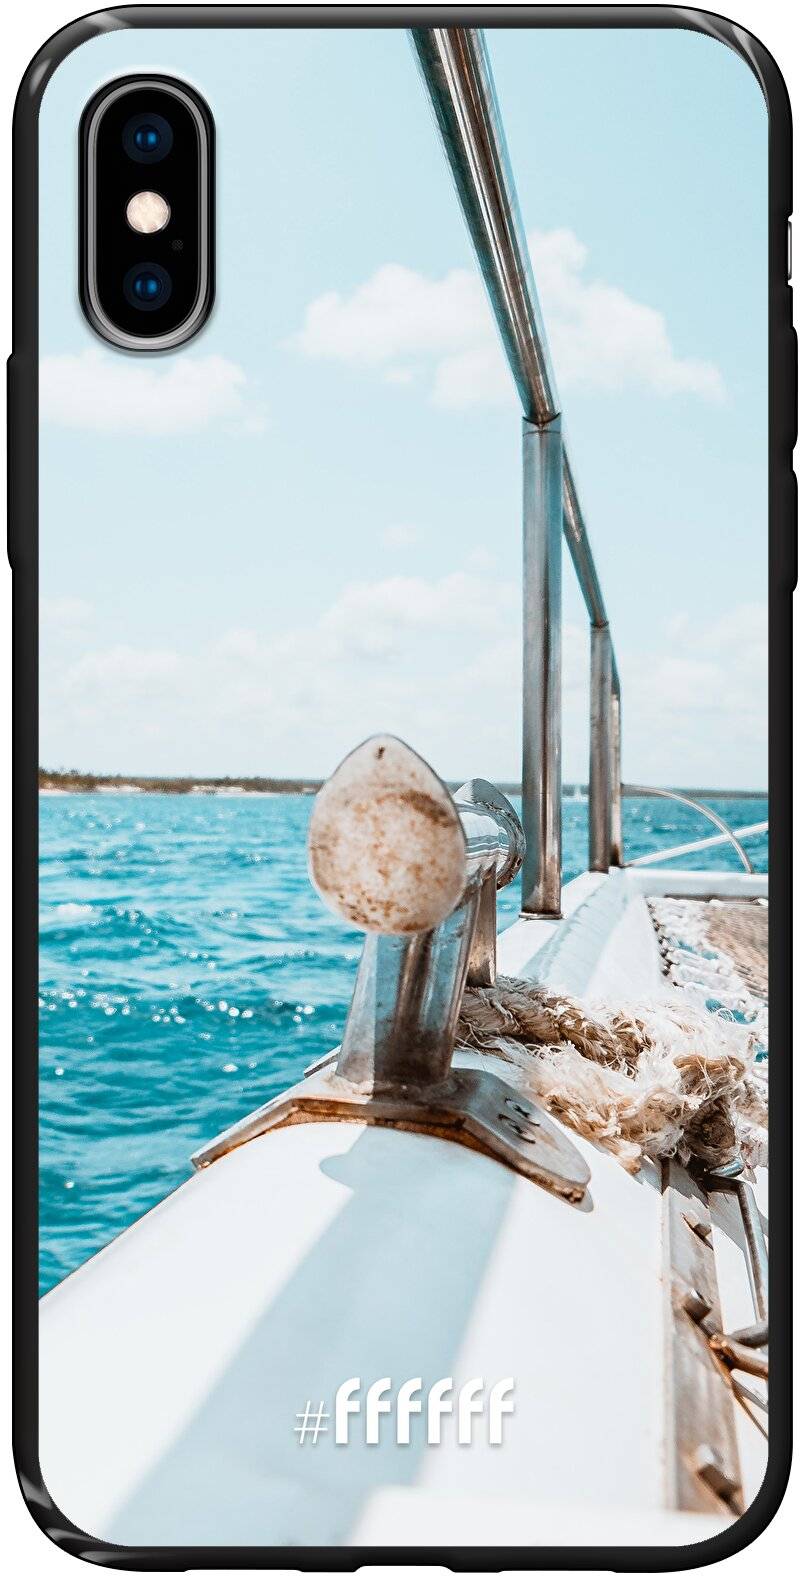 Sailing iPhone X